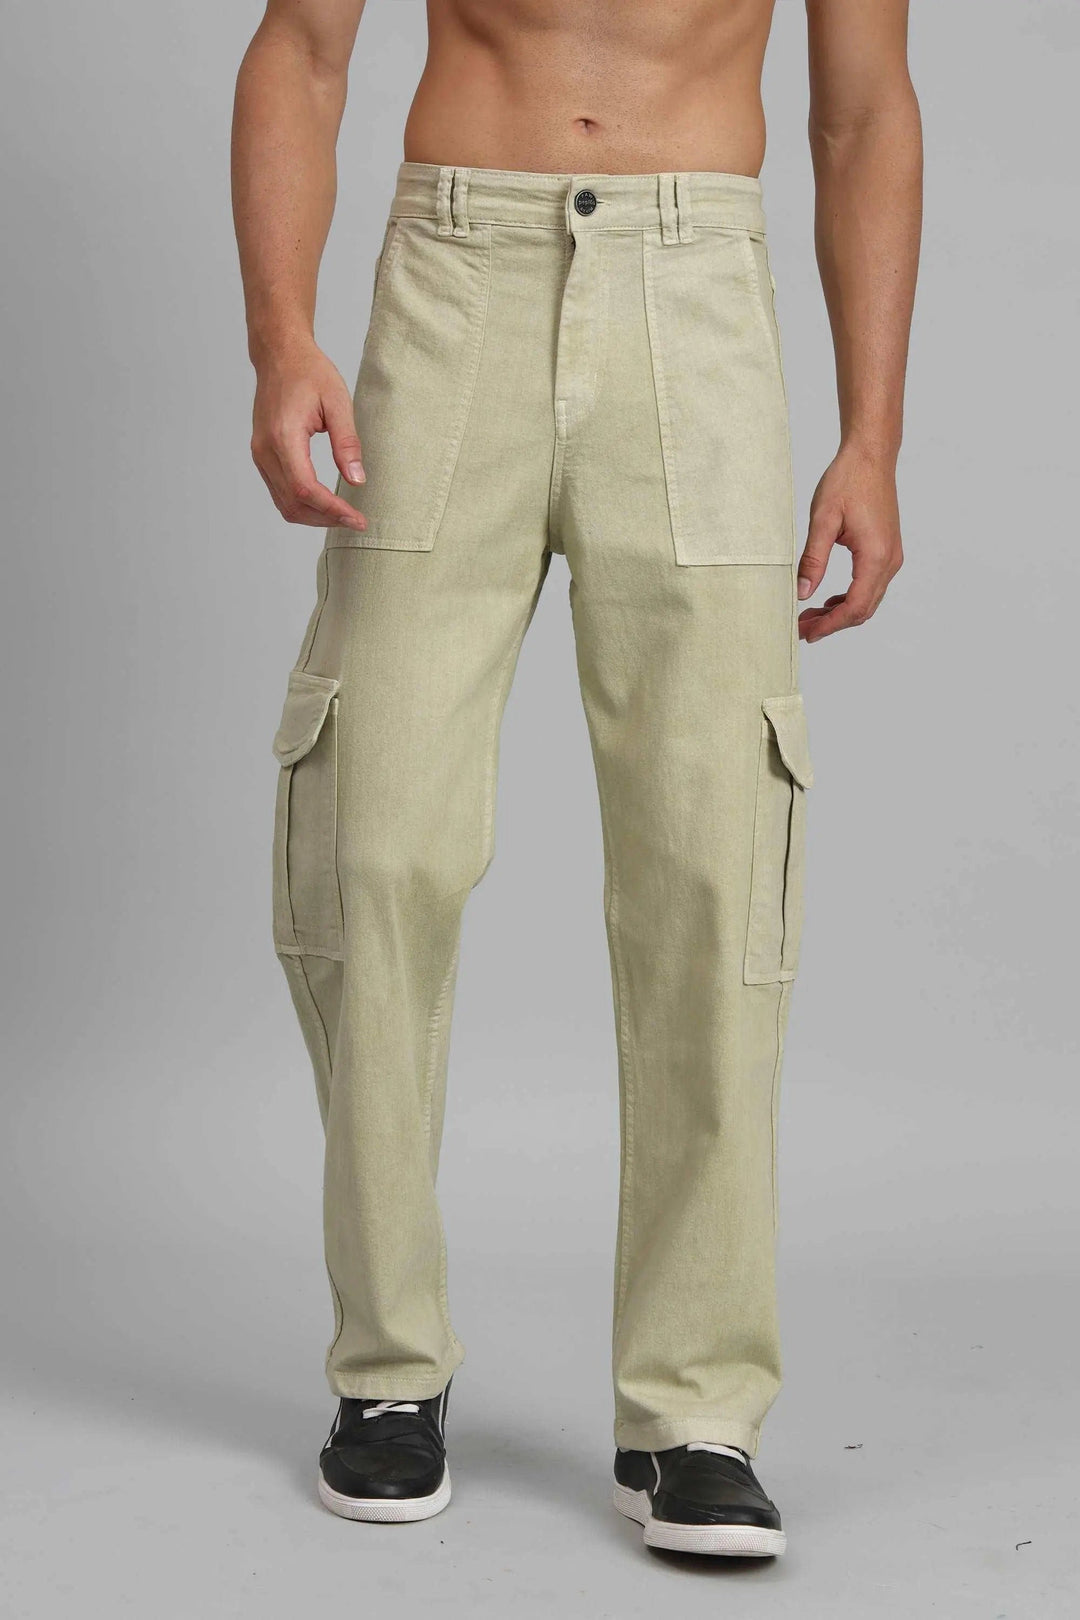 Men's Loose Fit Multiple Pocket Pista Lime Denim Cargo Pant - Peplos Jeans 